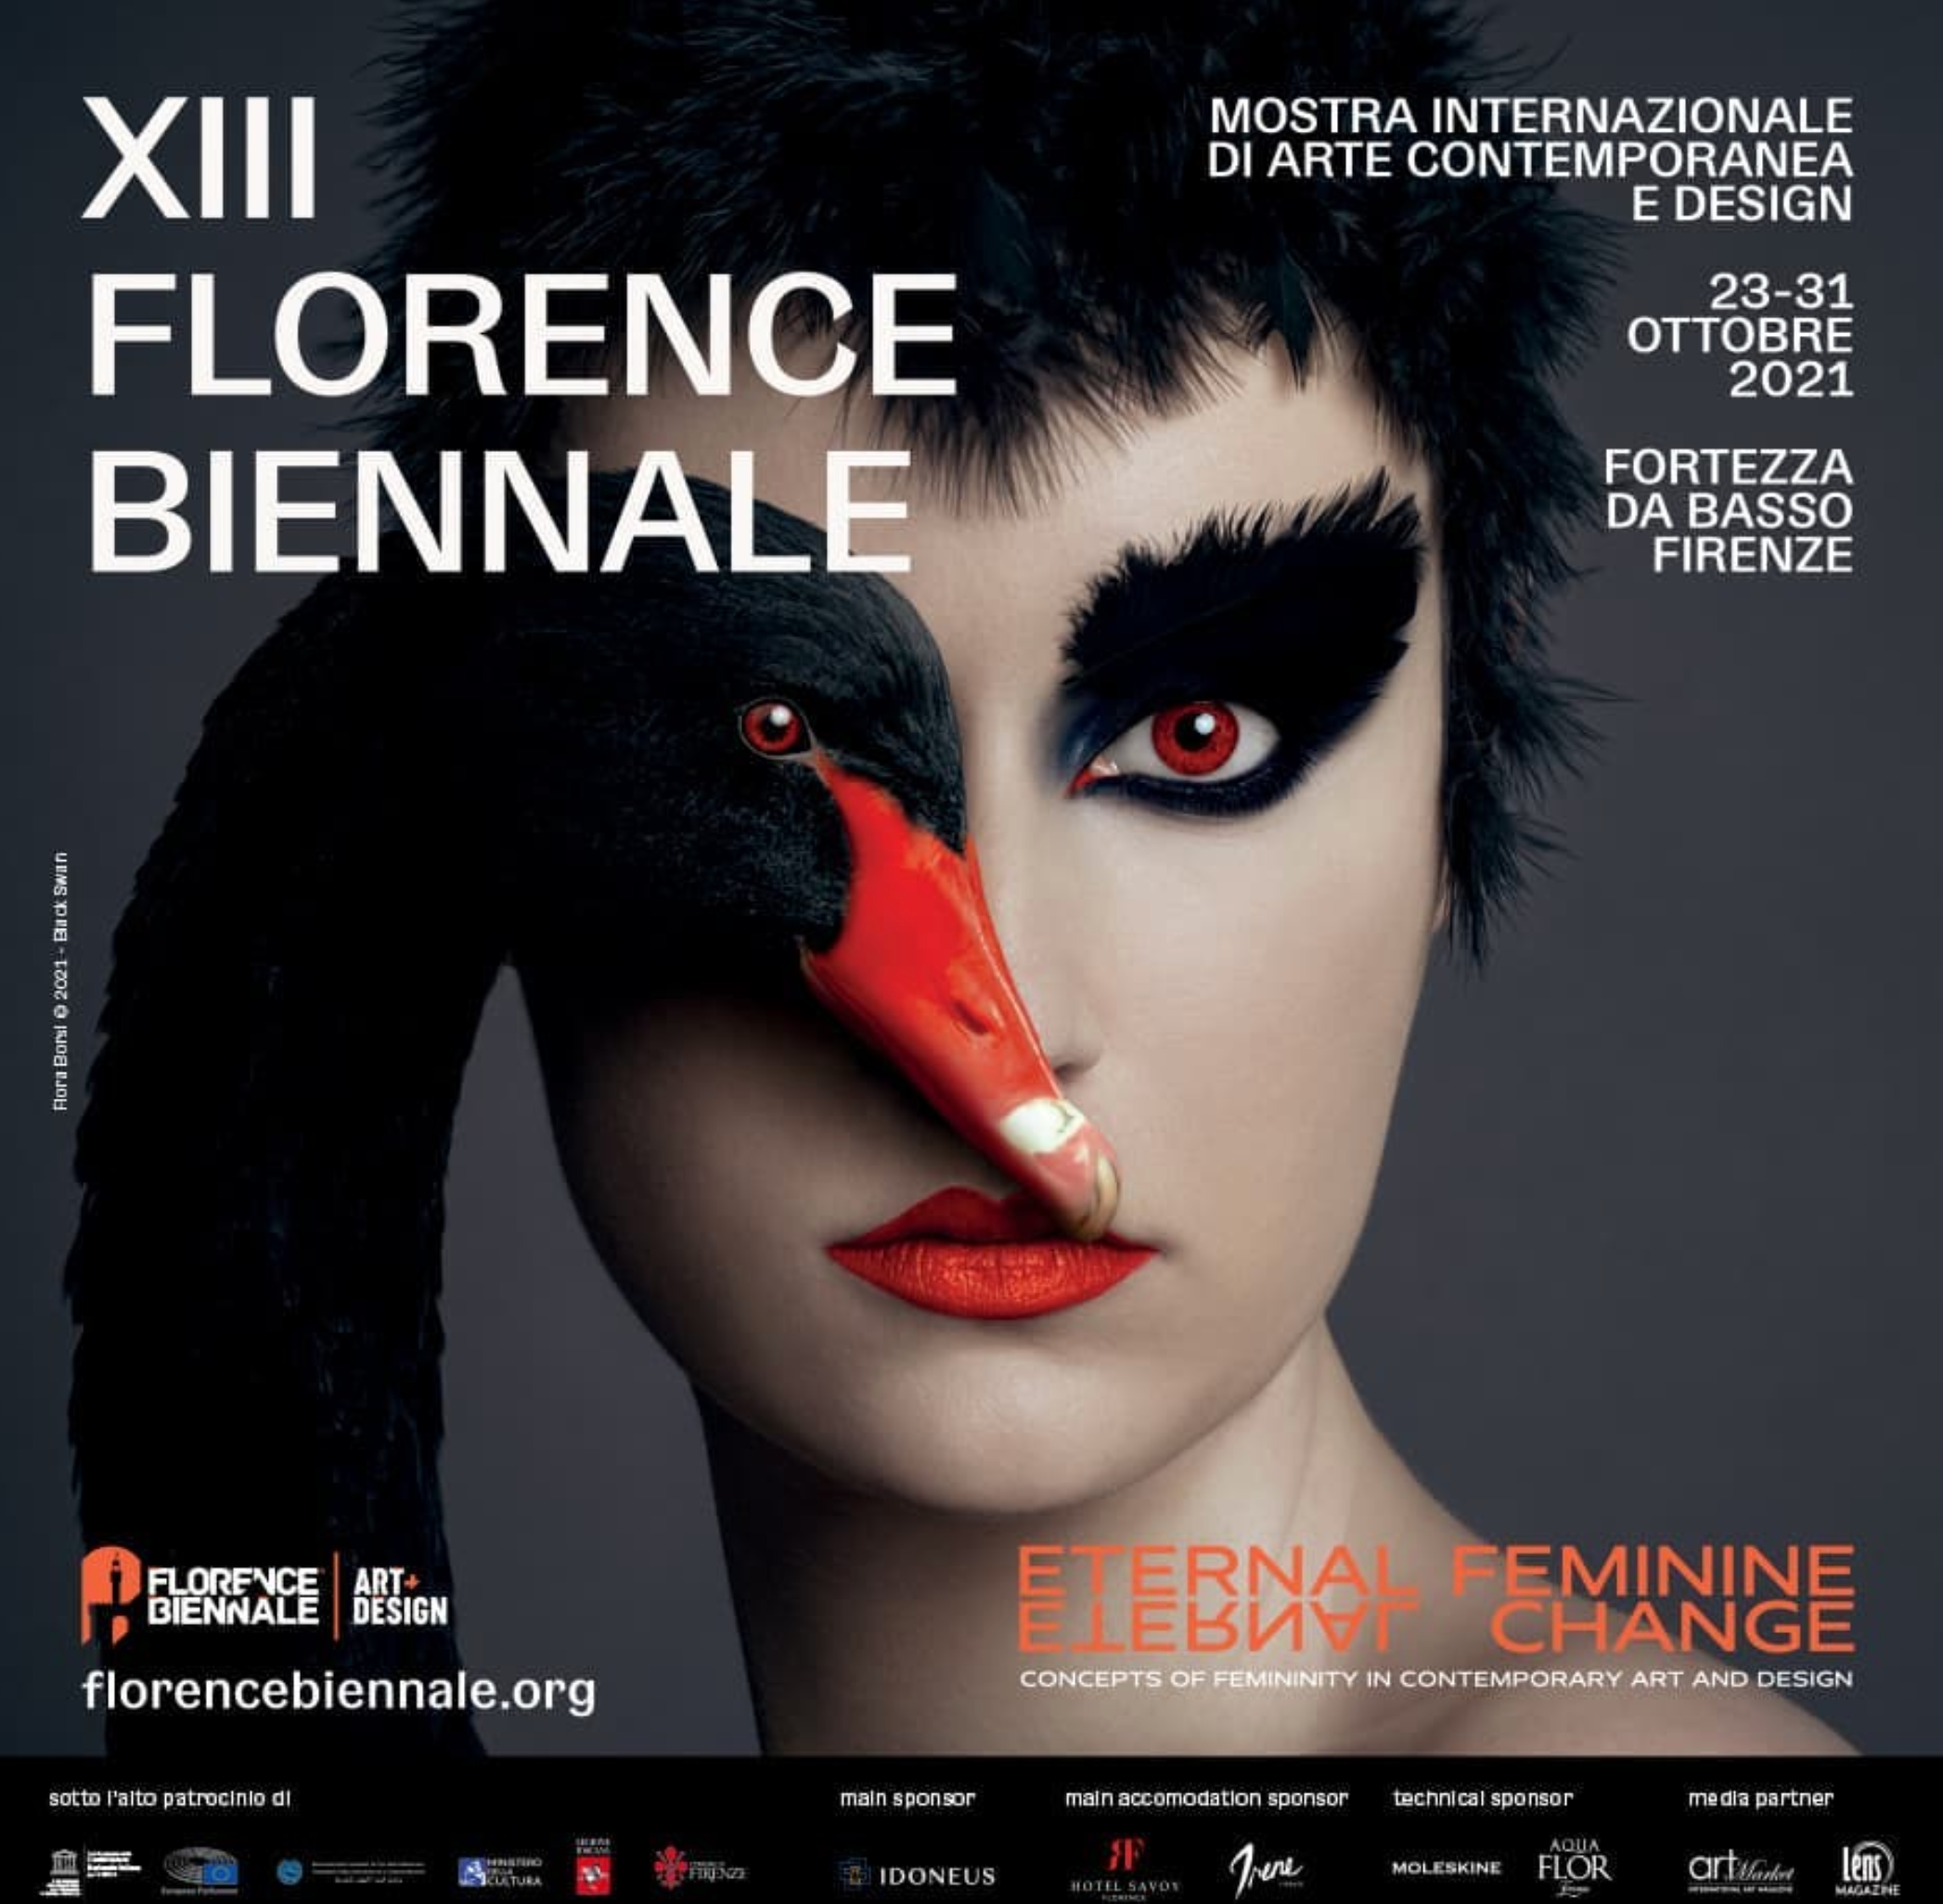 XIII Florence Biennale 2021